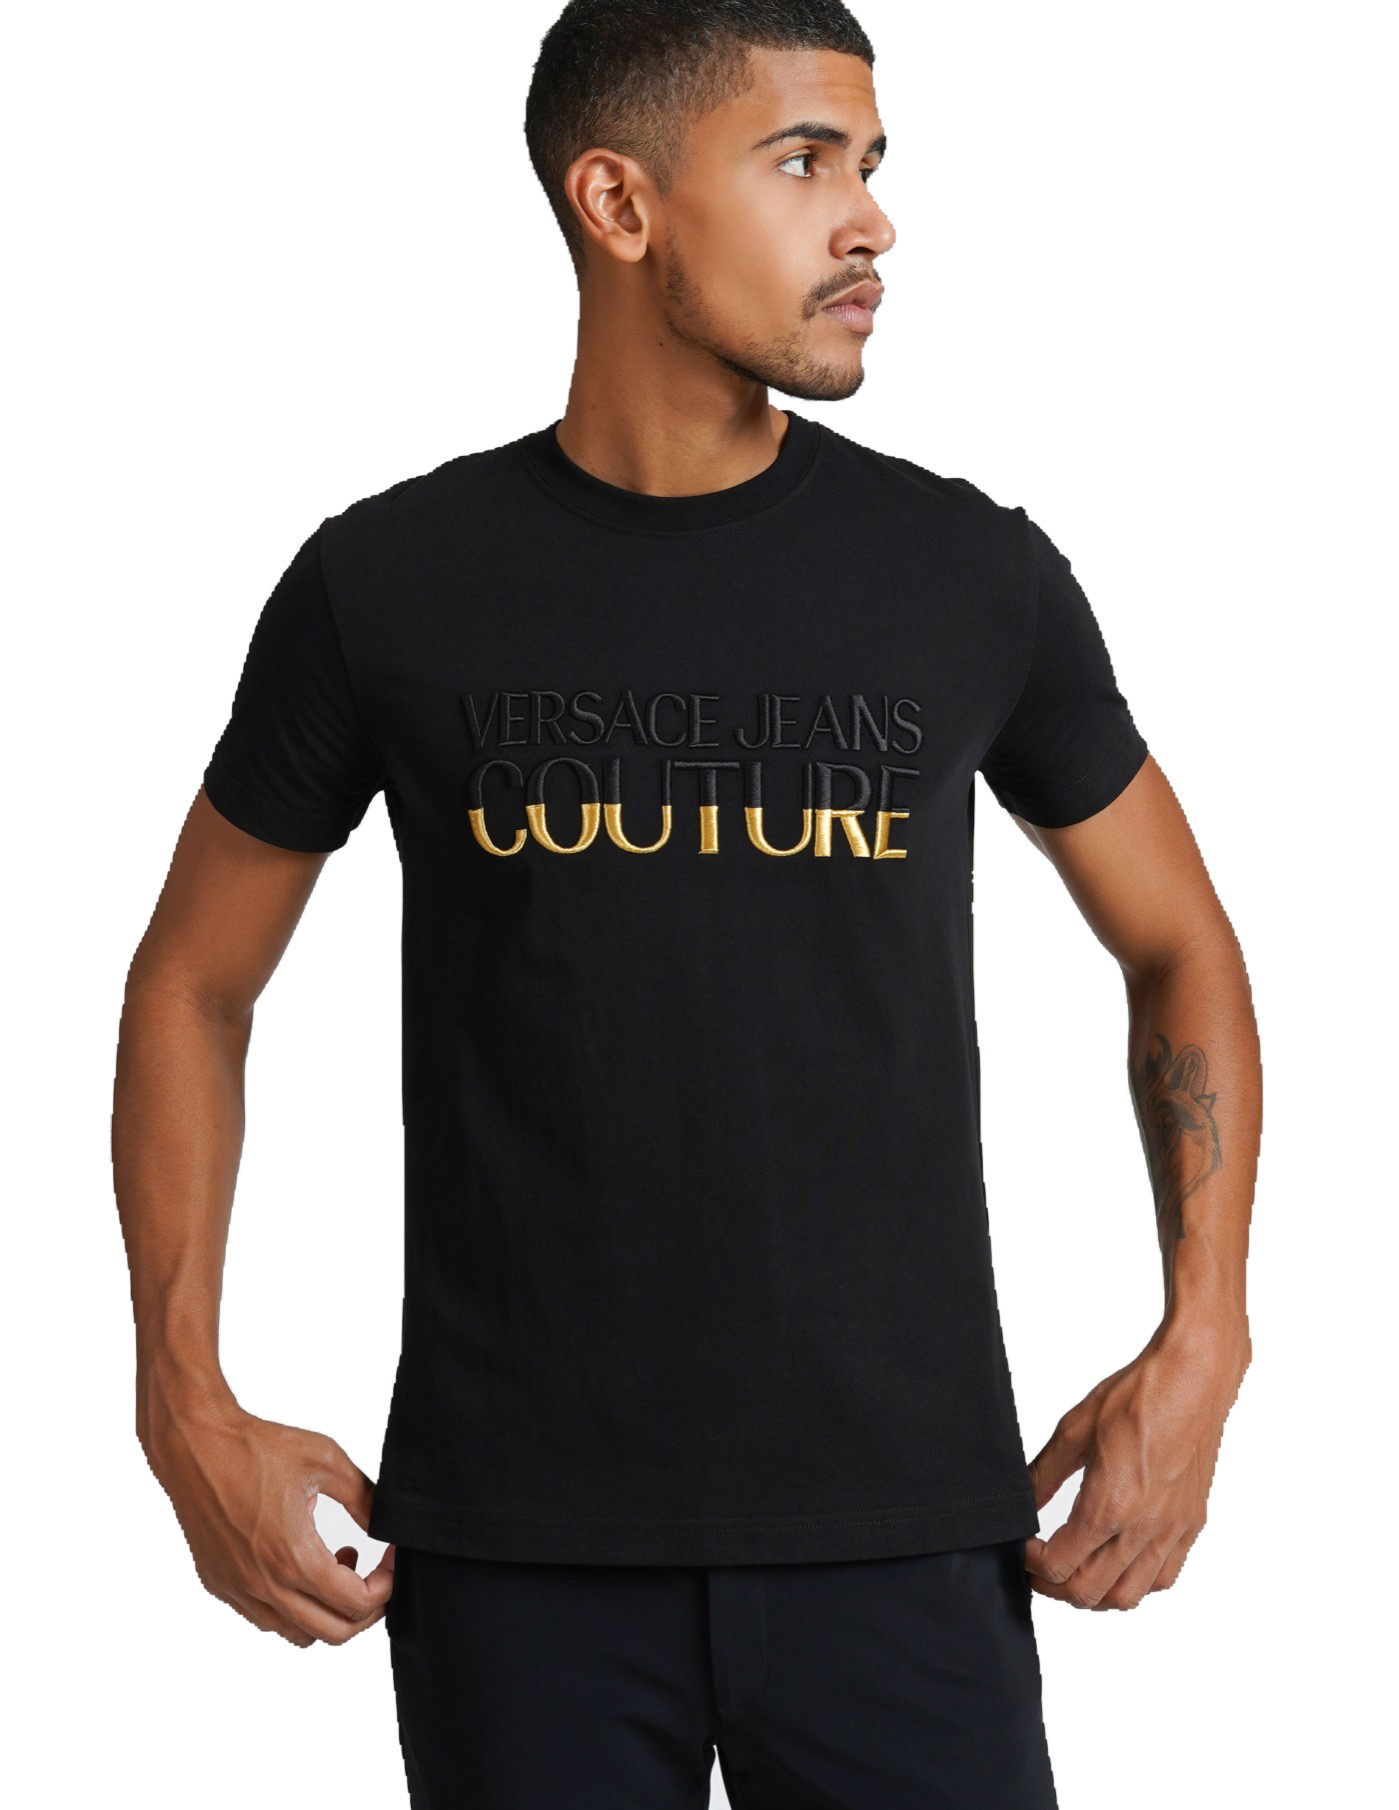 Camiseta logo bordado de Jeans Couture • Dolce Boutique